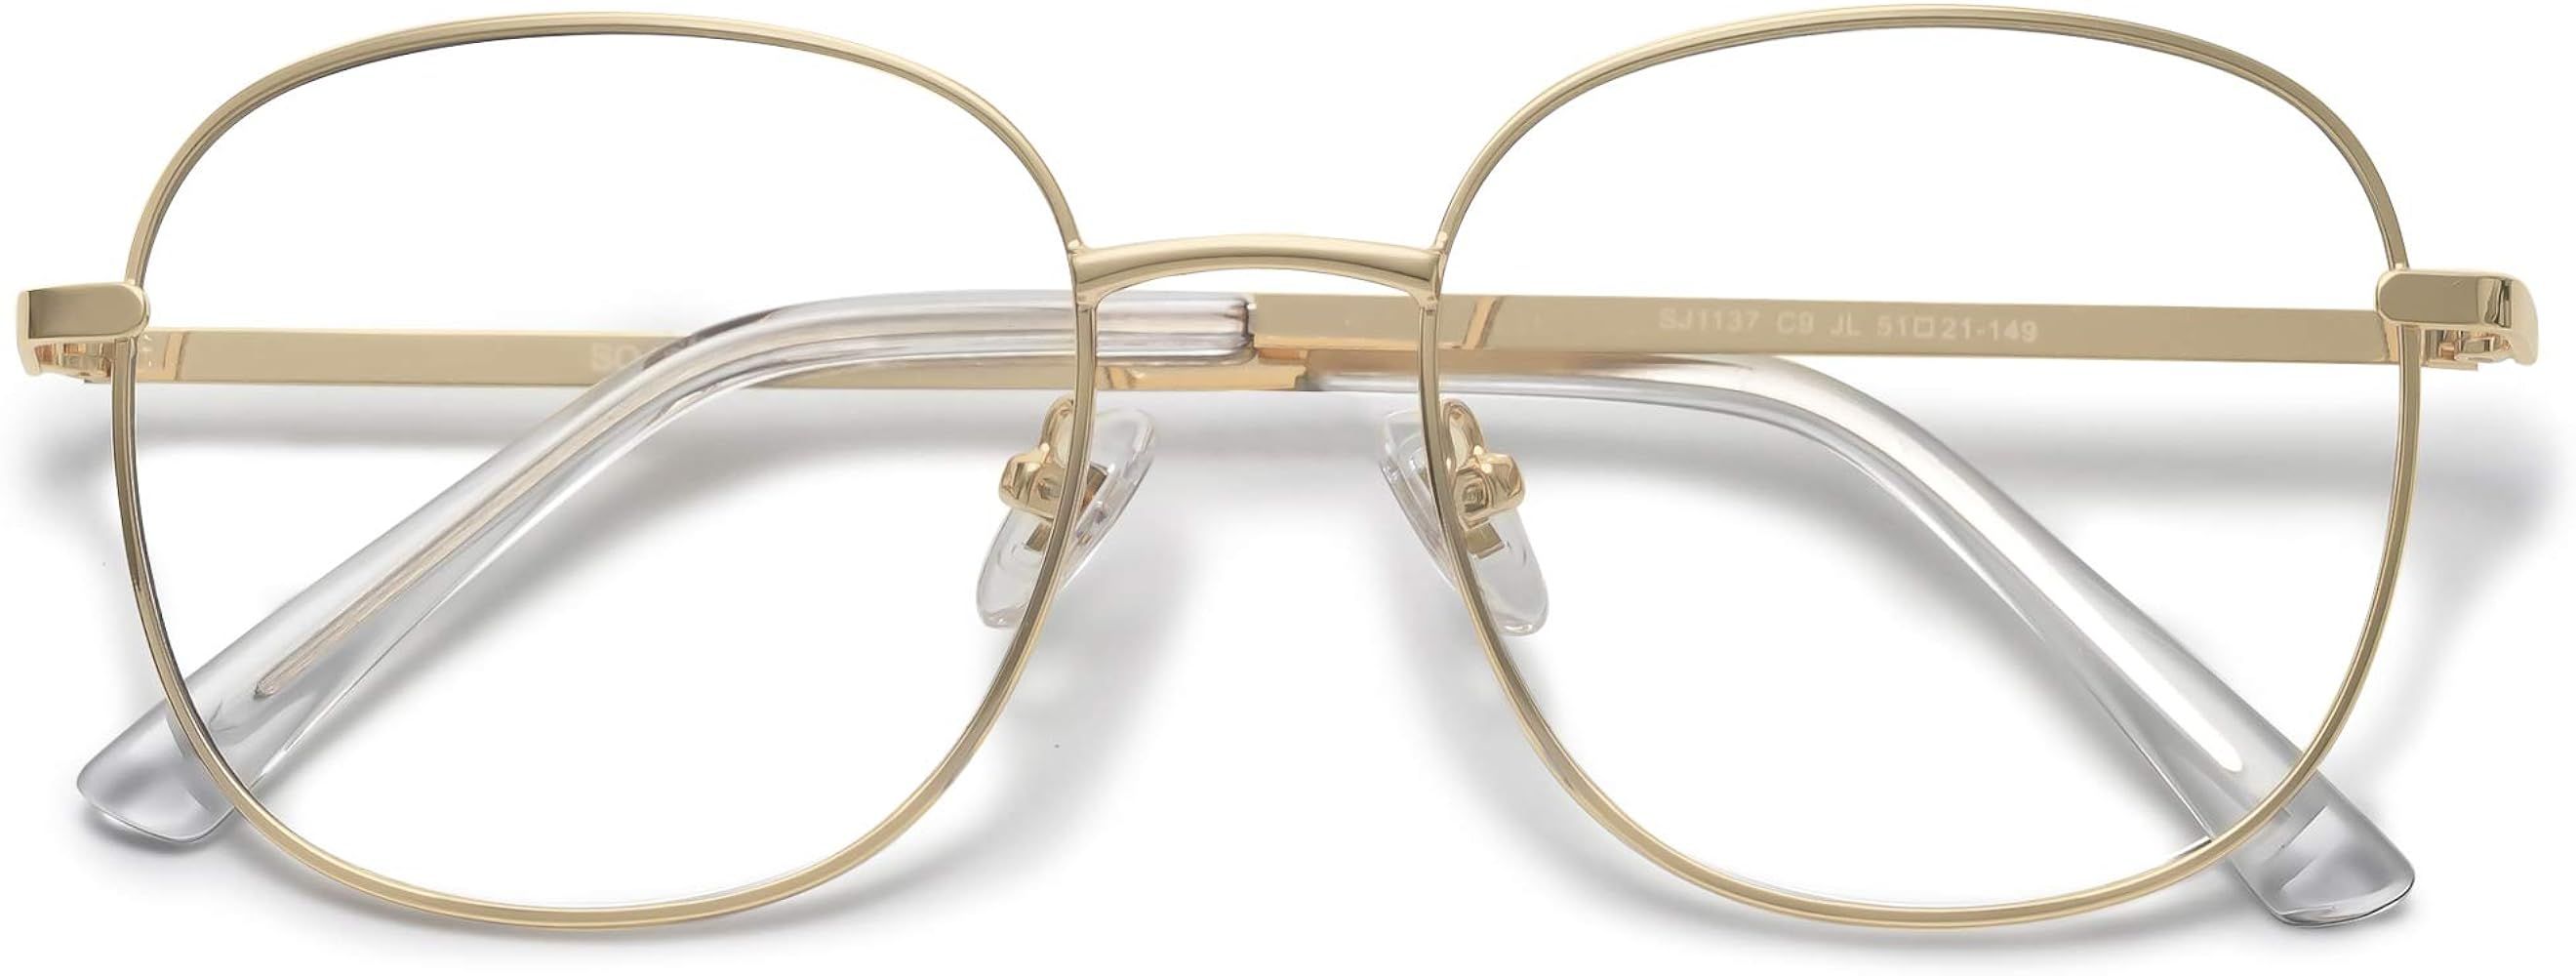 SOJOS Classic Square Blue Light Blocking Glasses for Women Men Stylish Computer Glasses SJ1137 | Amazon (US)